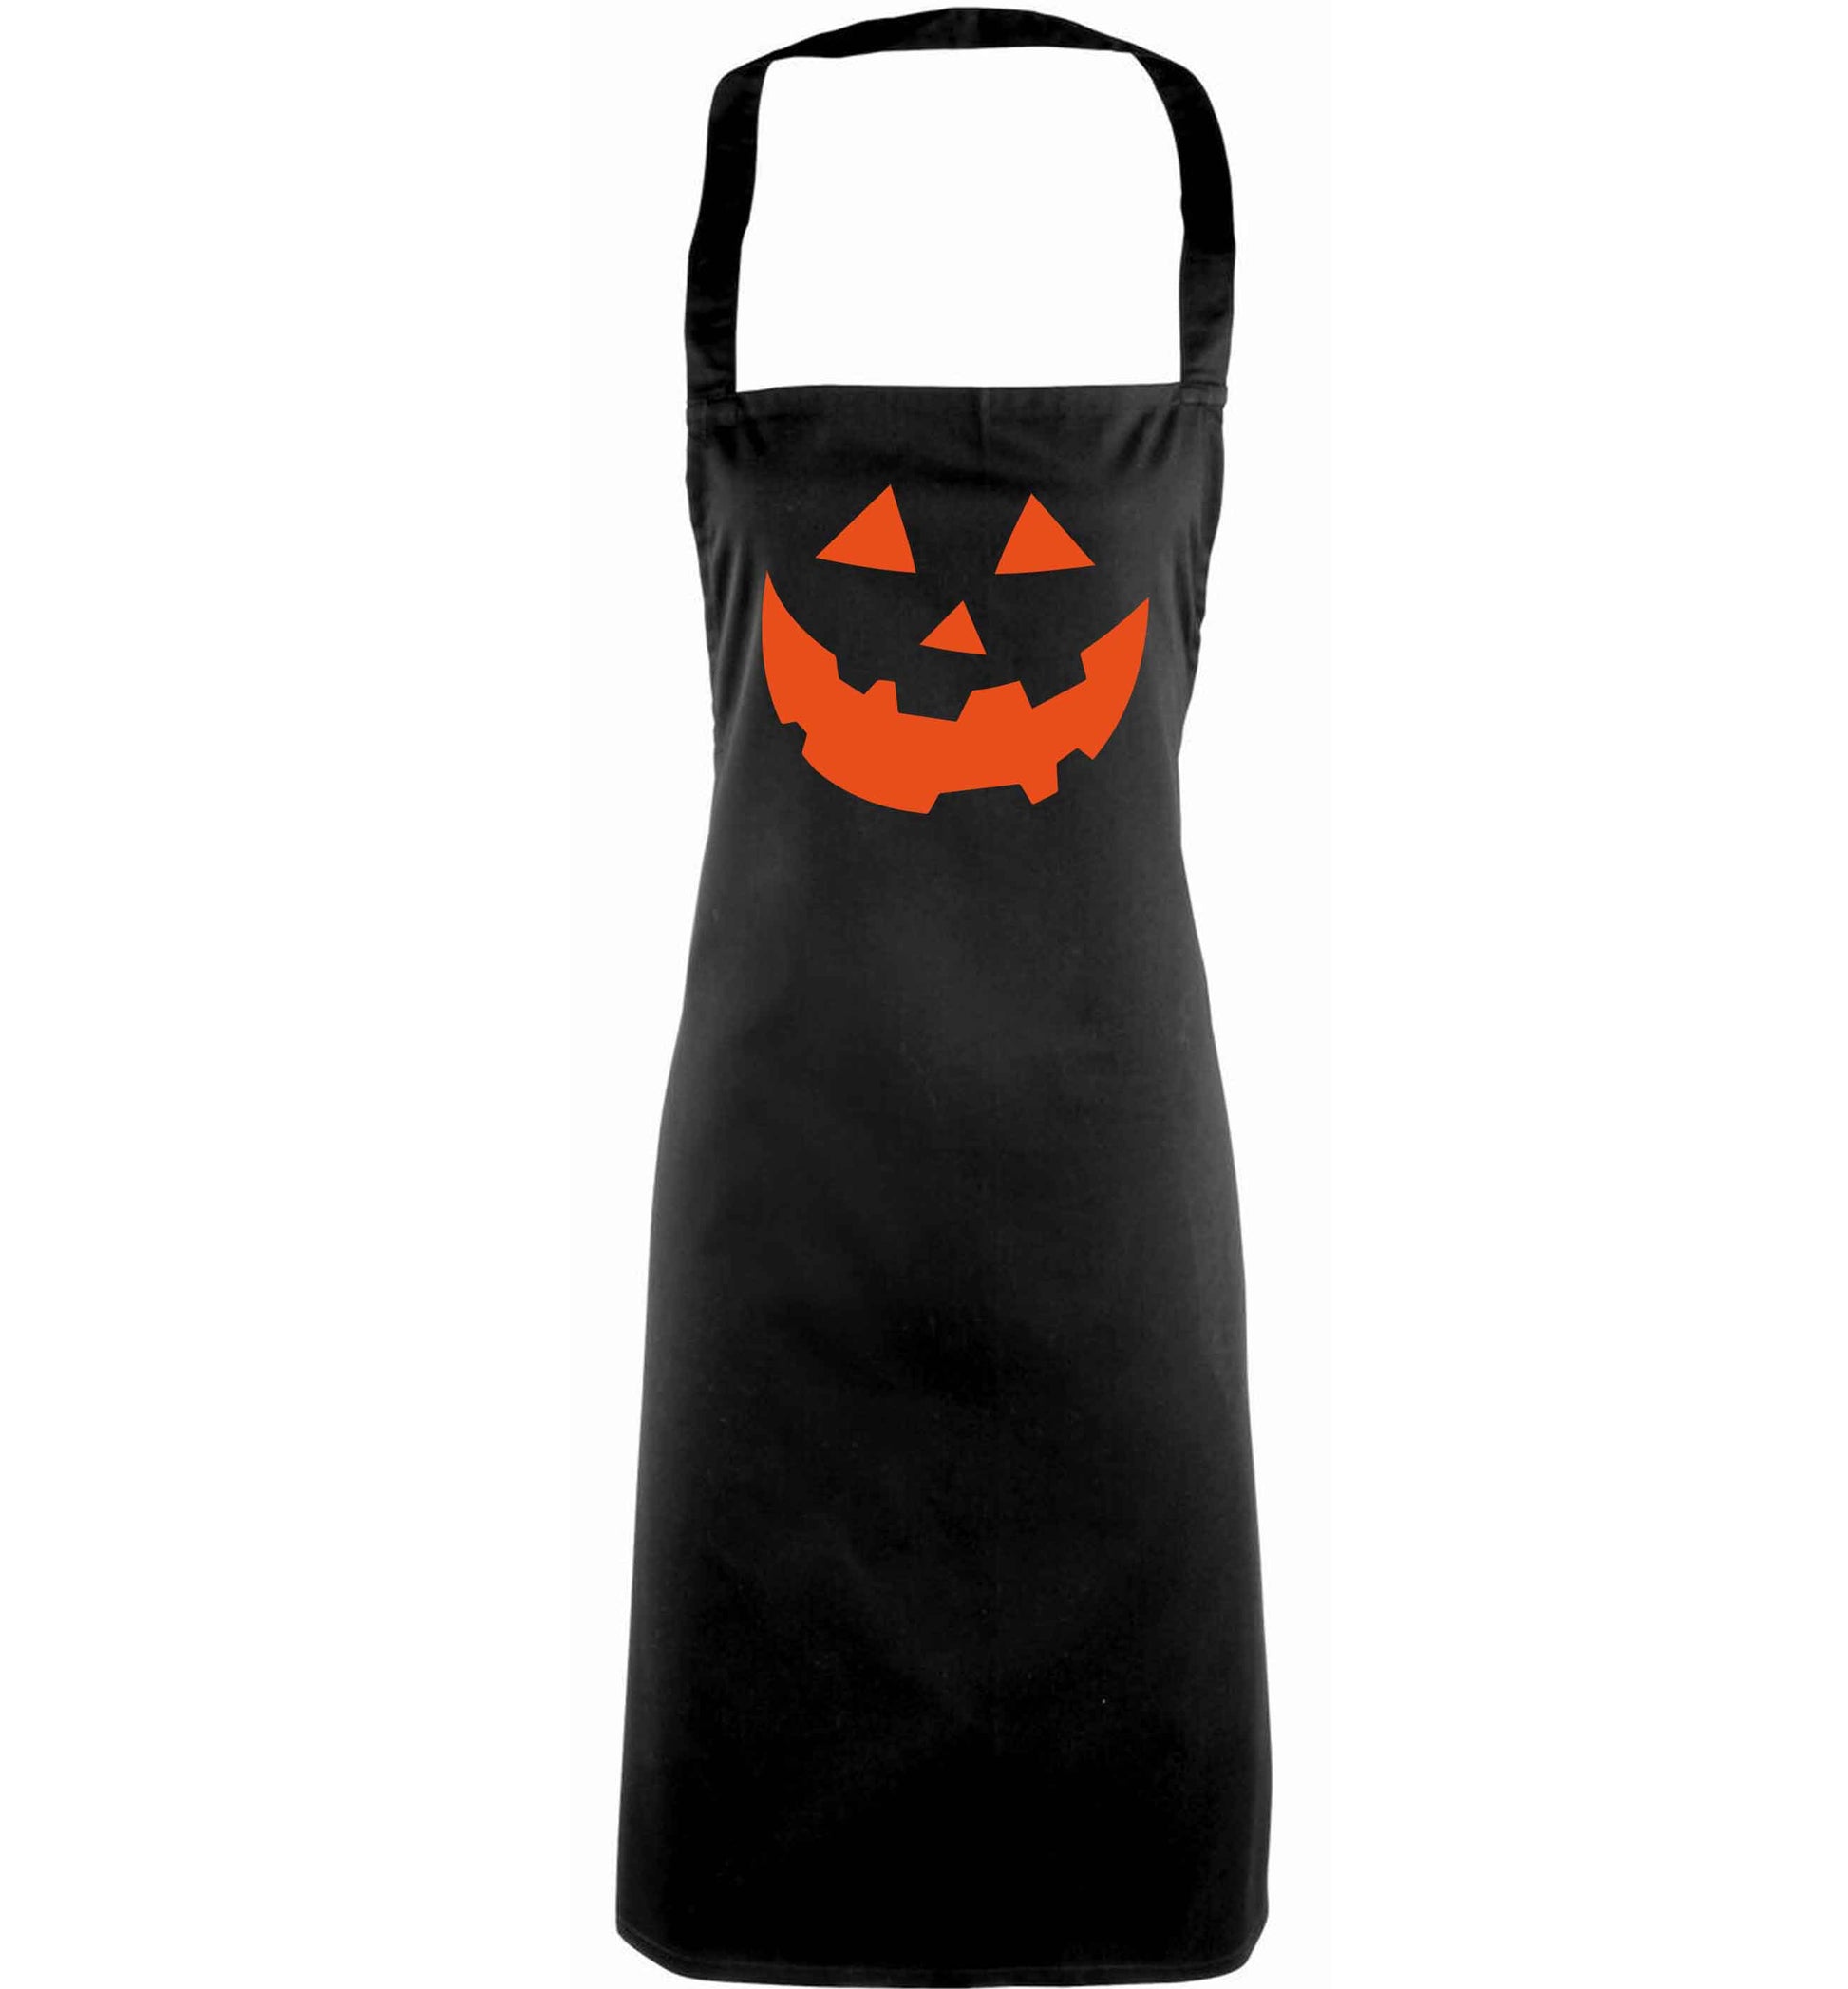 Pumpkin Spice Nice adults black apron